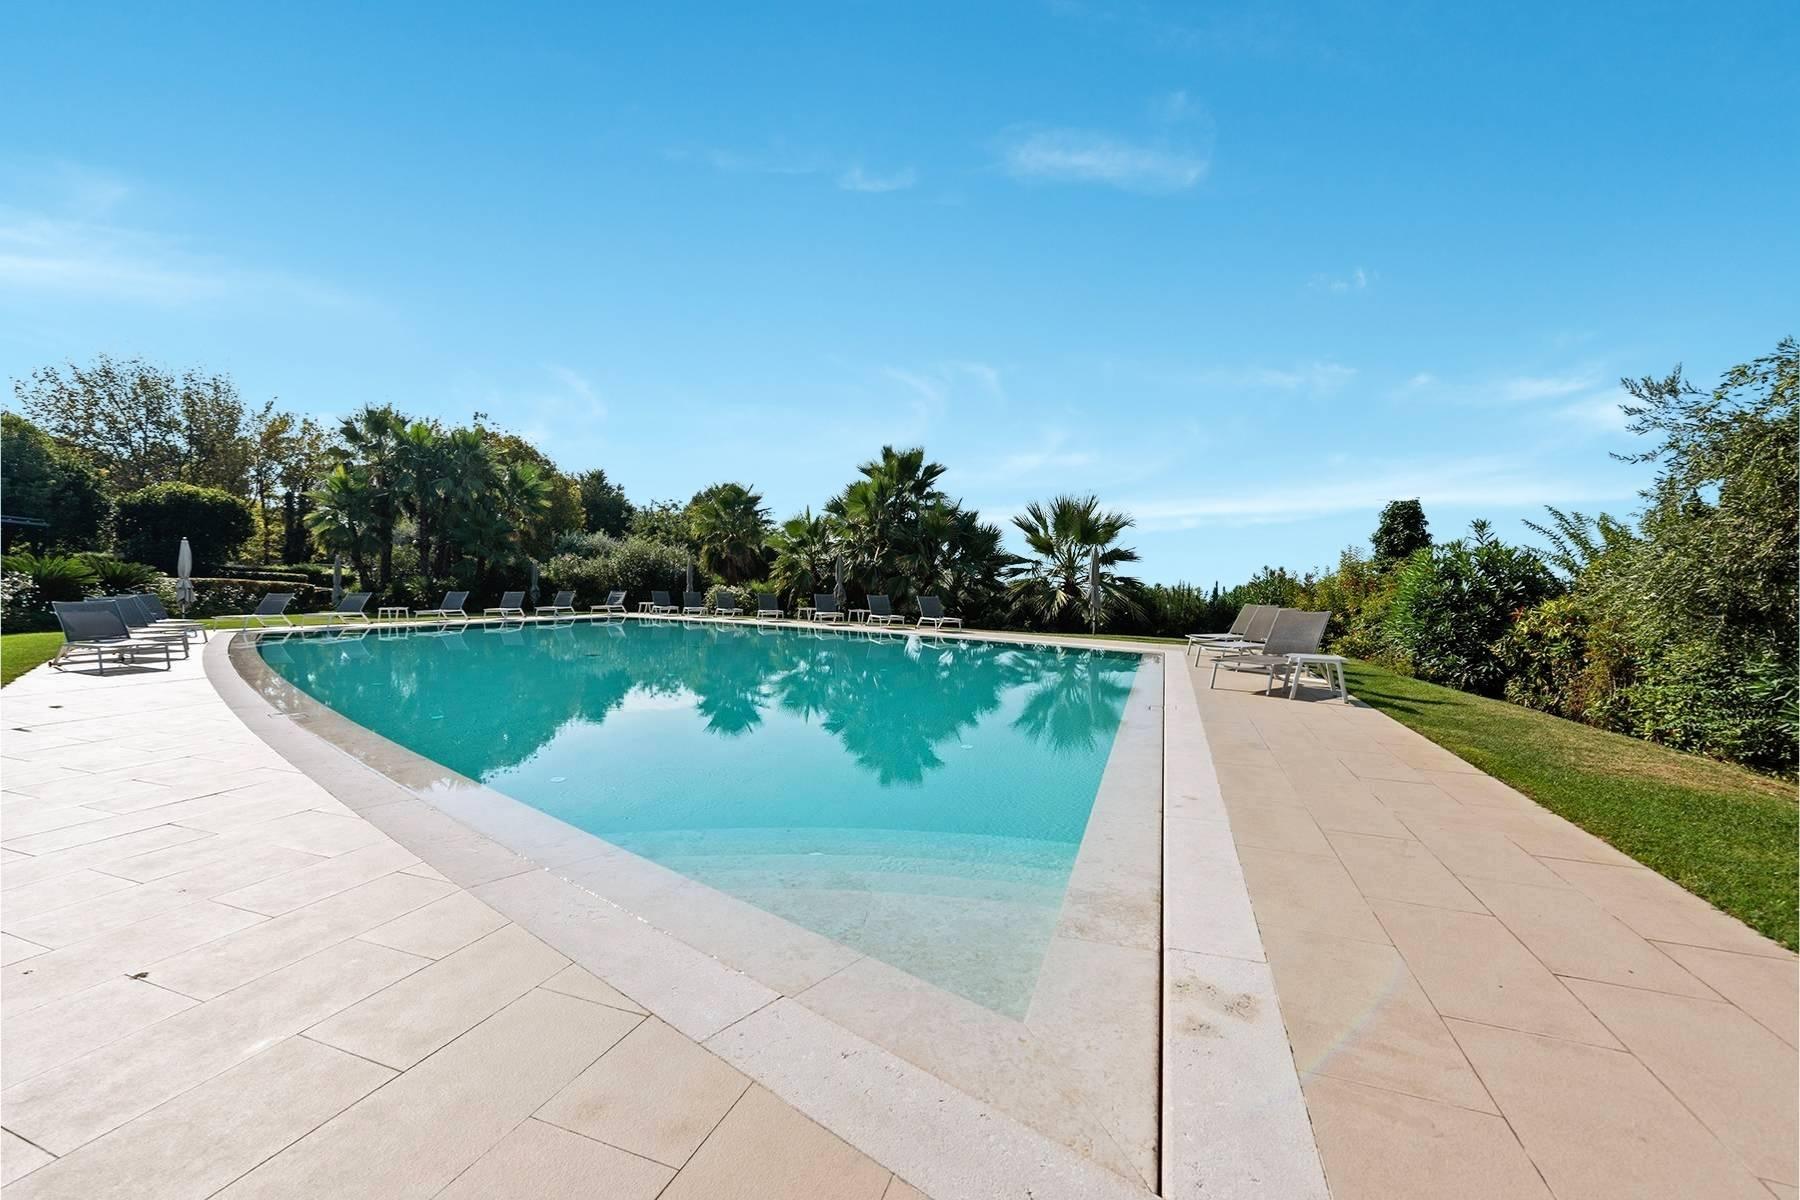 Villetta in elegante residence con piscina - 12